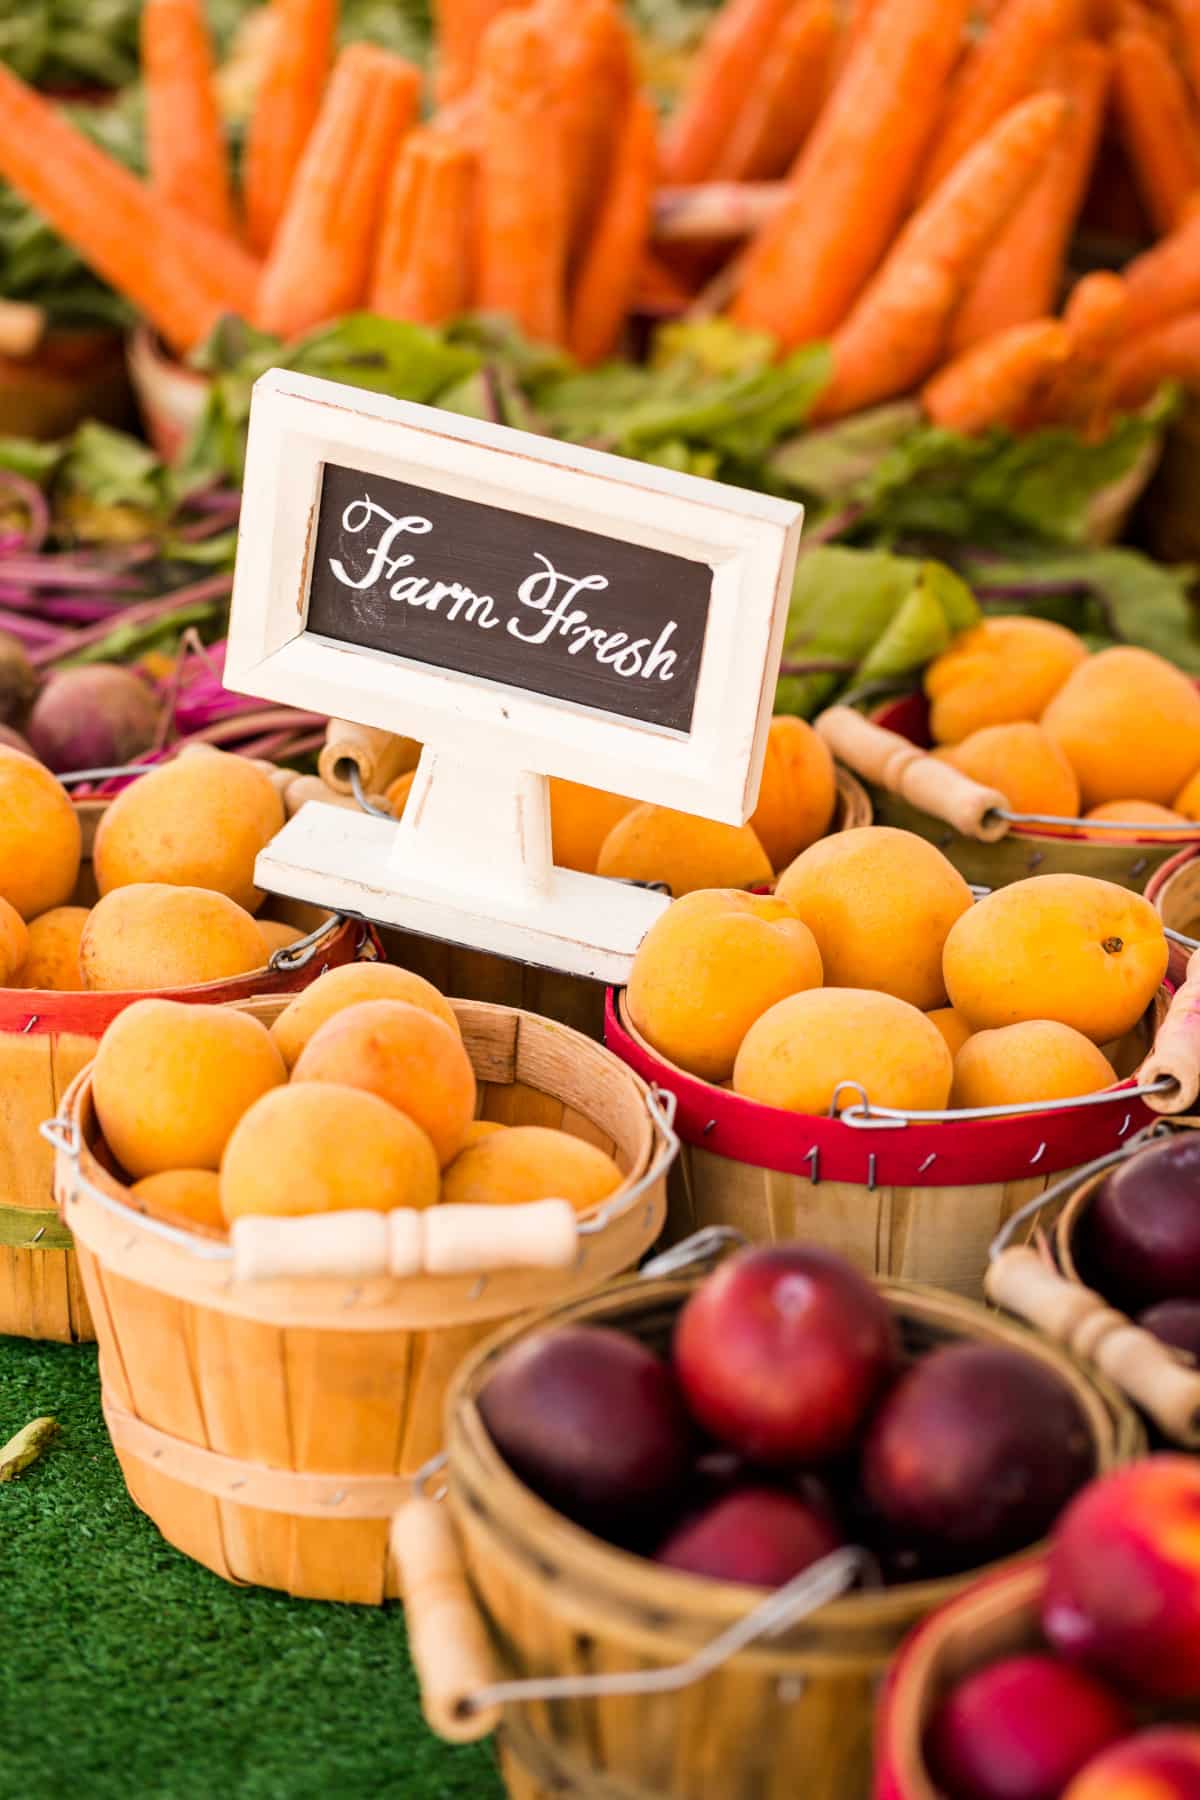 Apple creates of fresh organic produce on sale at the local farmers market.